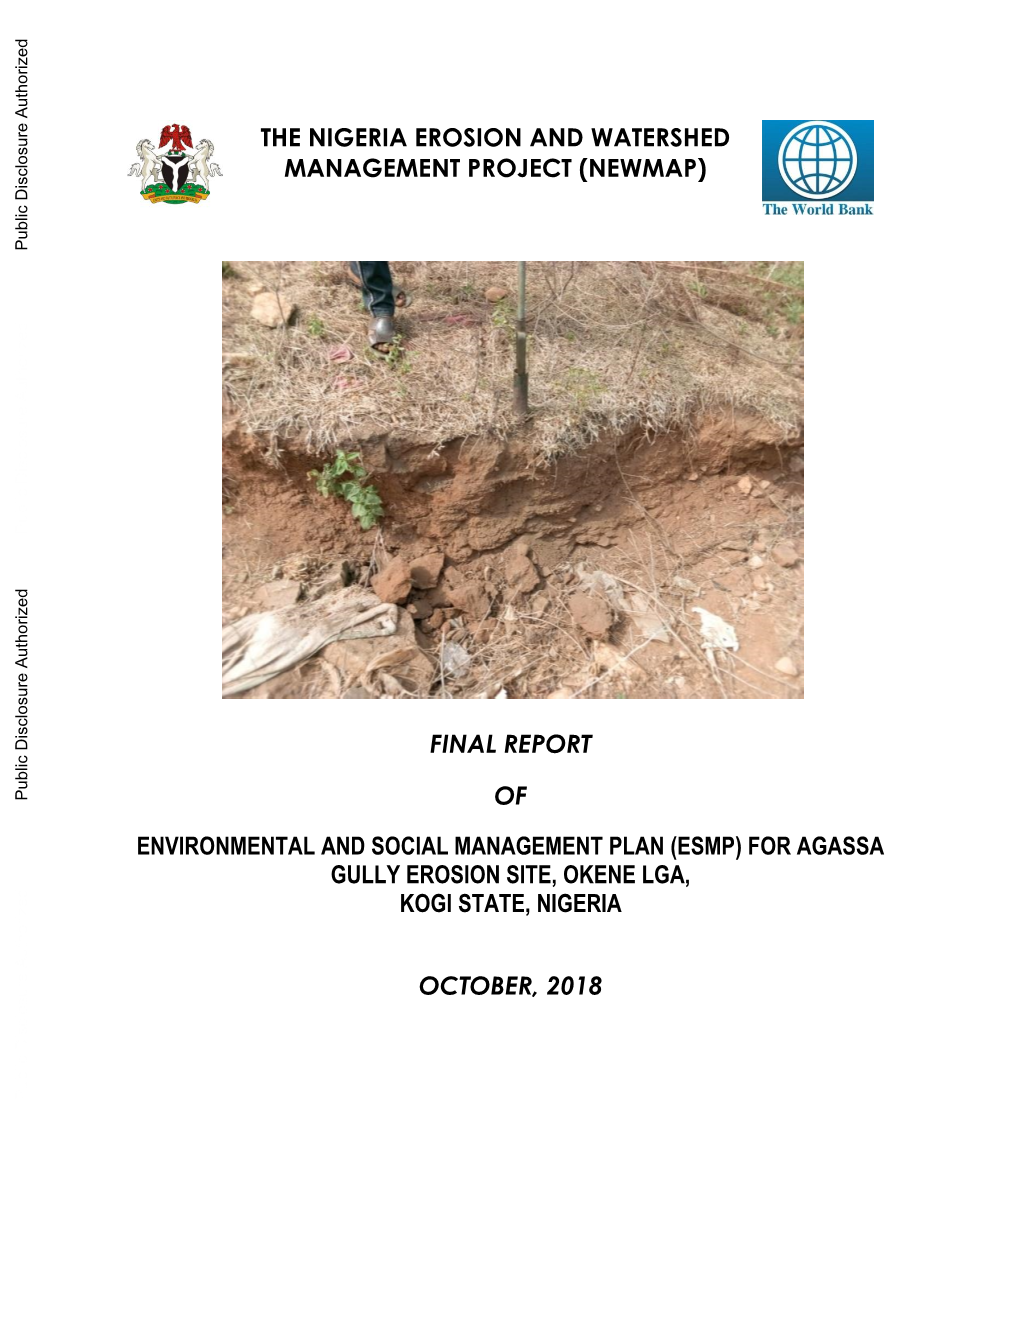 For Agassa Gully Erosion Site, Okene Lga, Kogi State, Nigeria